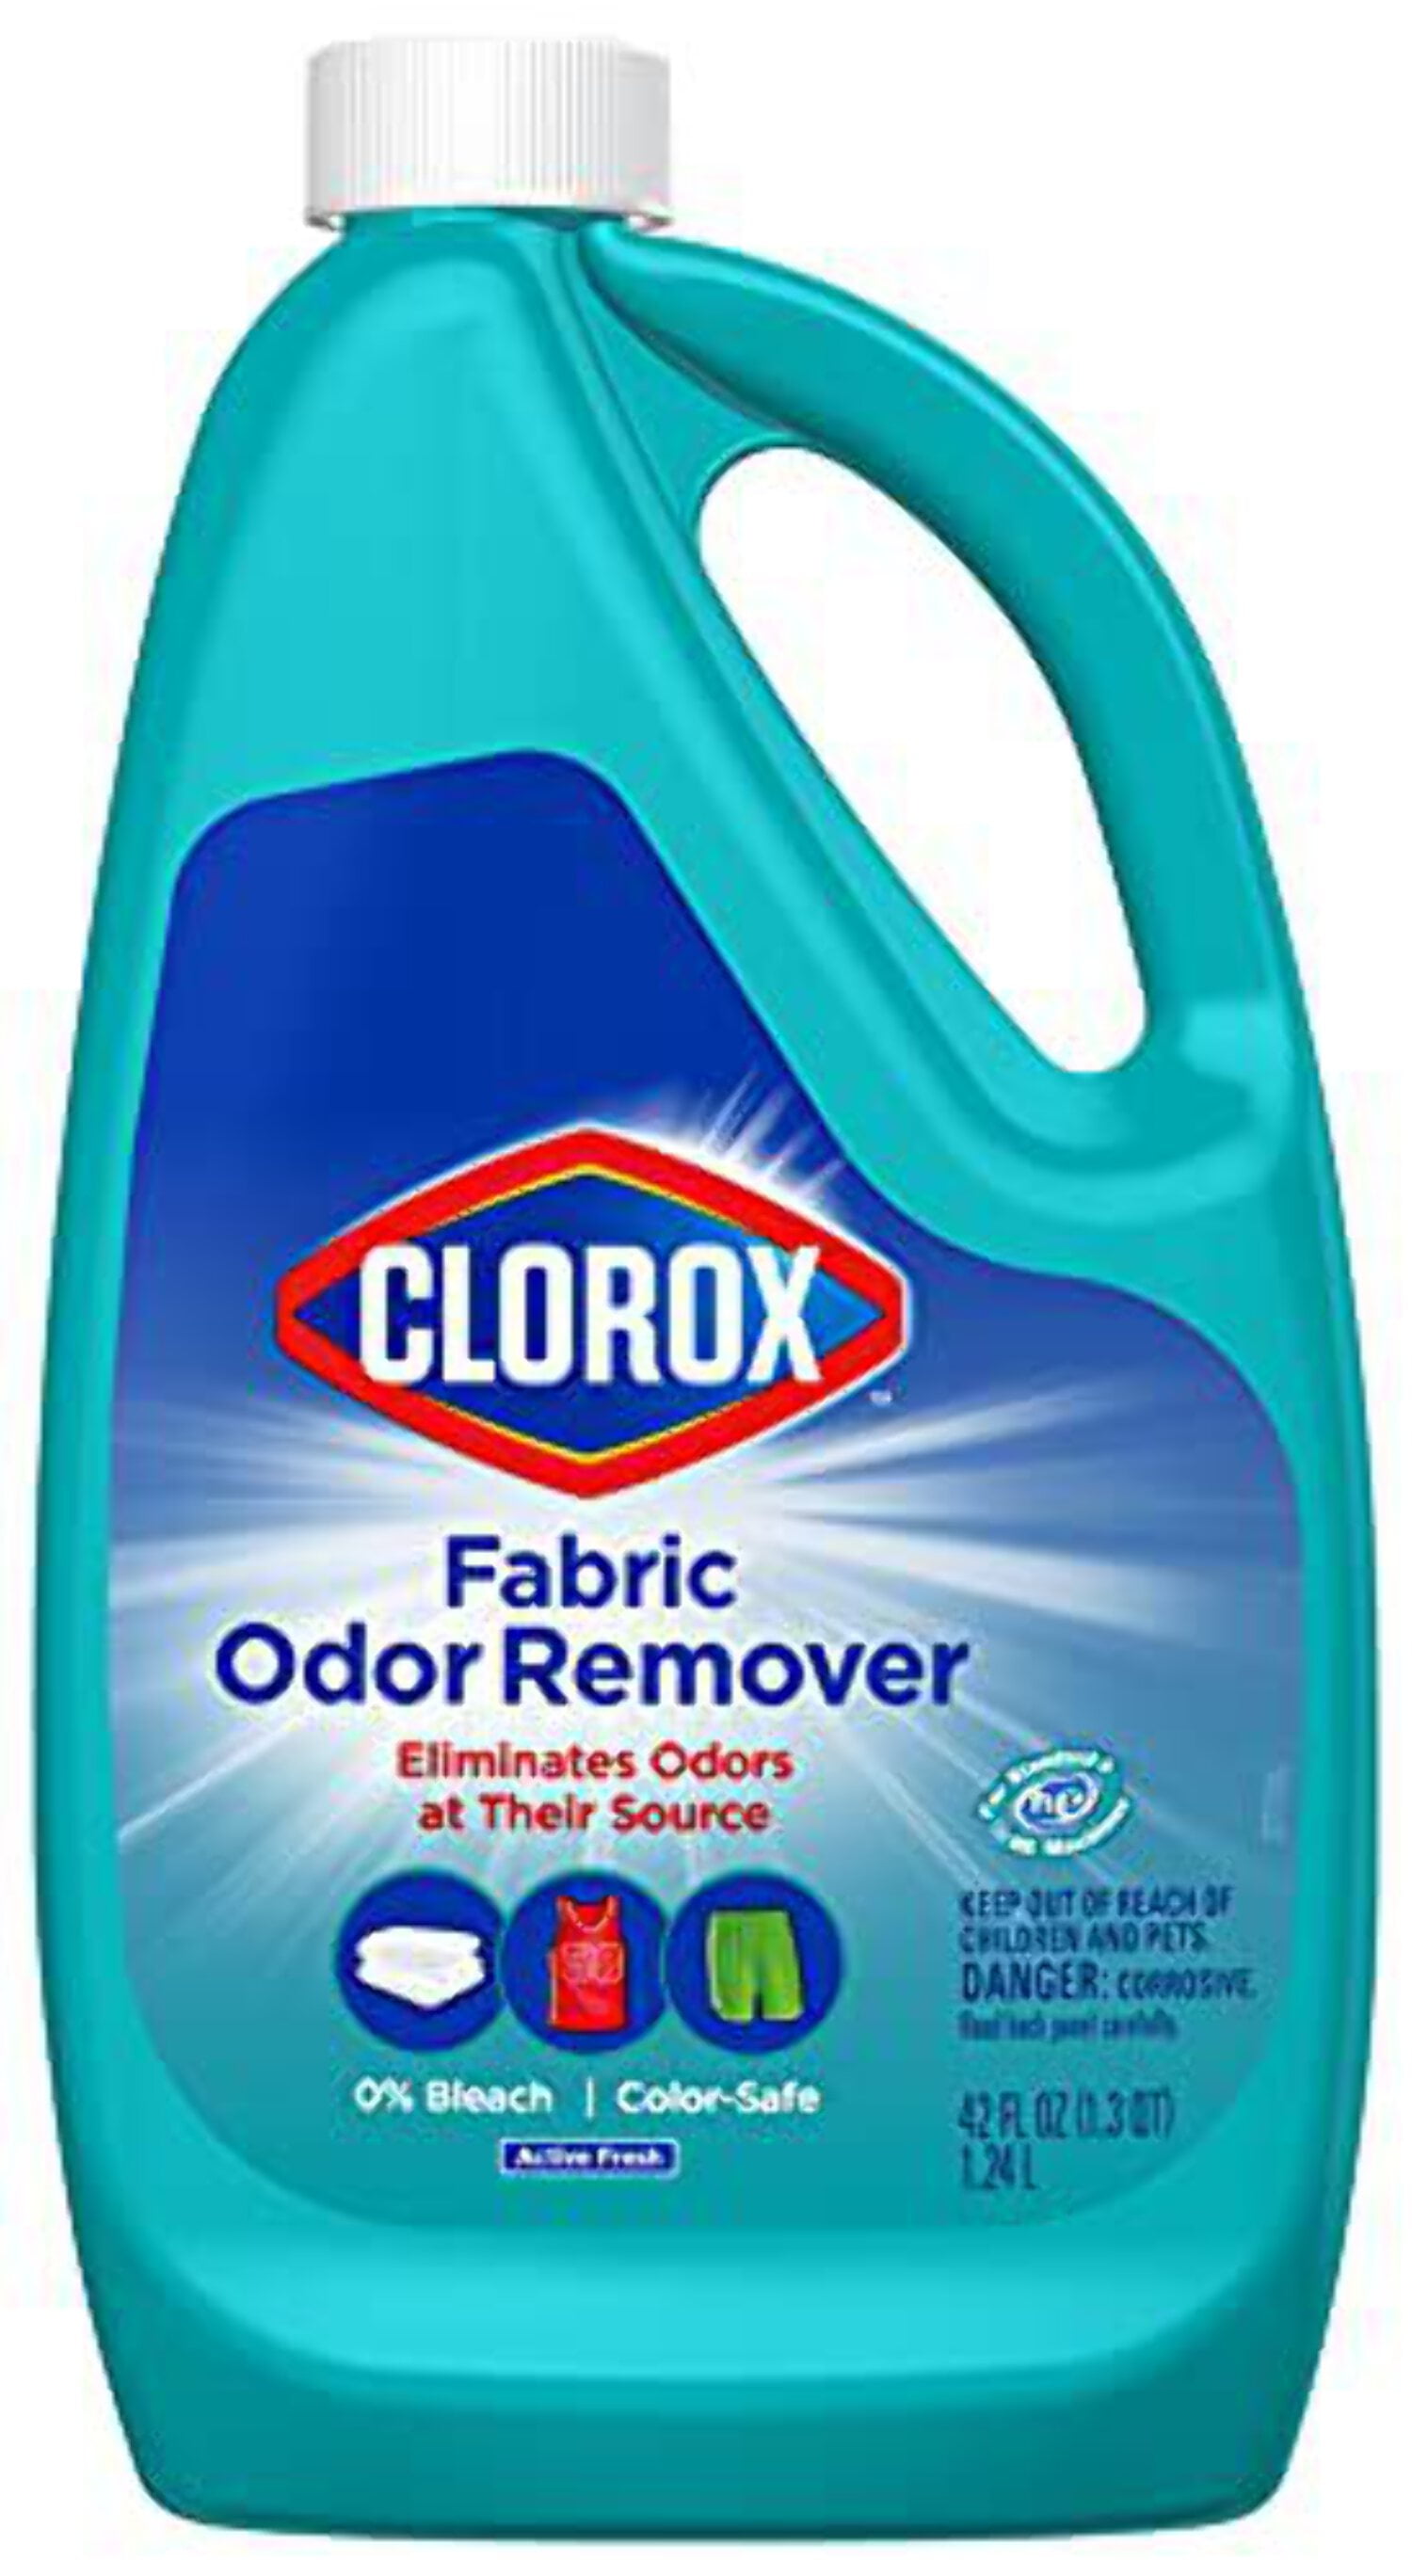 Clorox Laundry Sanitizer, Unscented, 42 Fl Oz